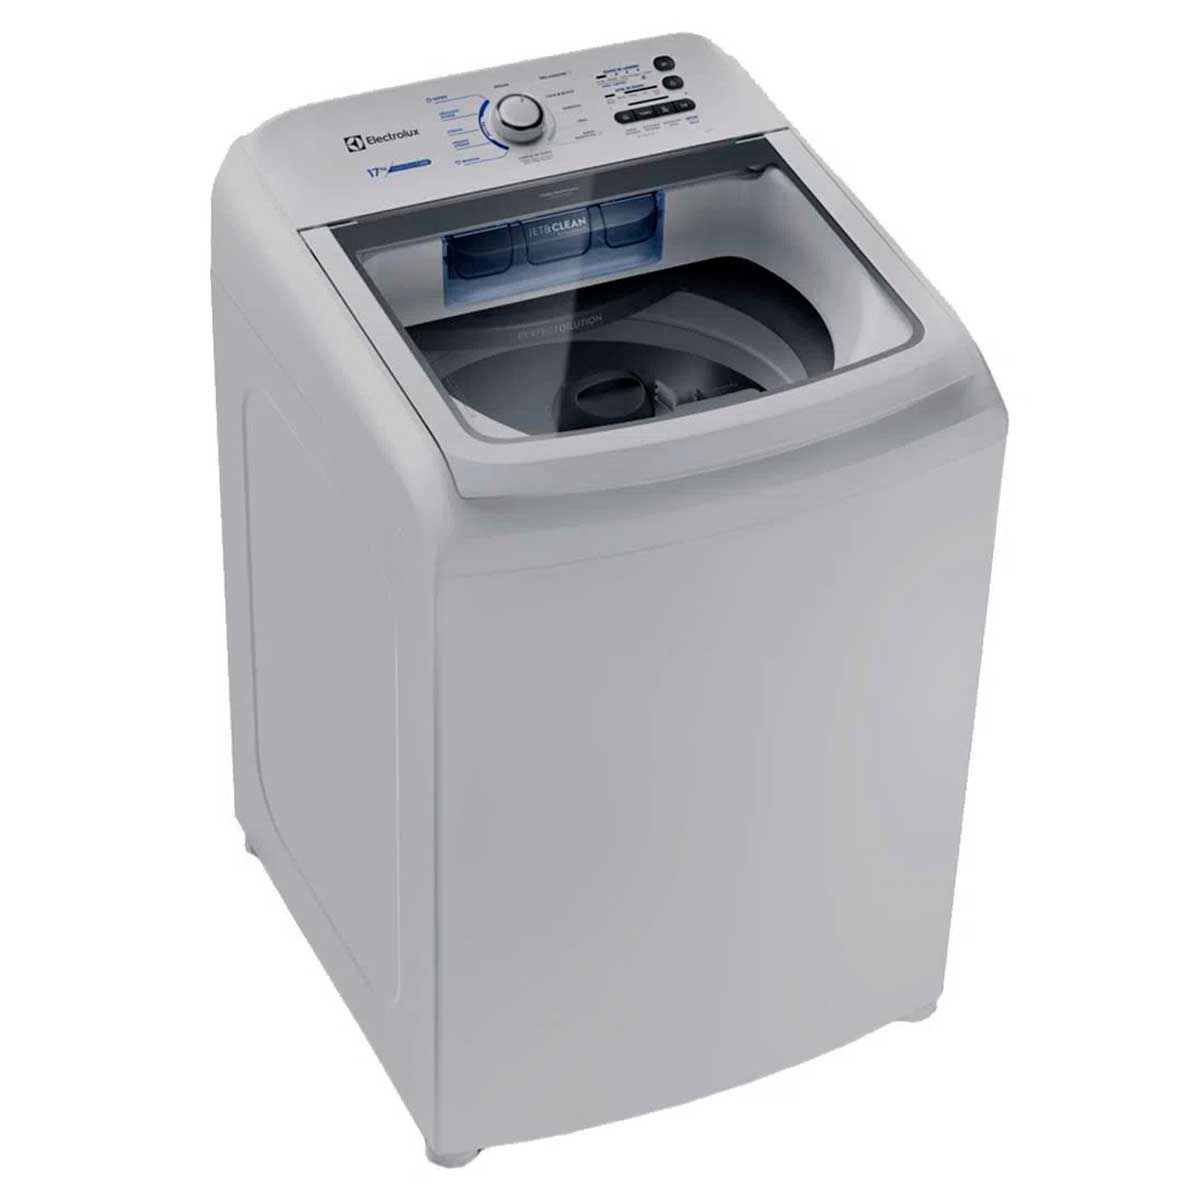 lavadora-electrolux-led17-17kg-110v-branca-com-cesto-inox-3.jpg